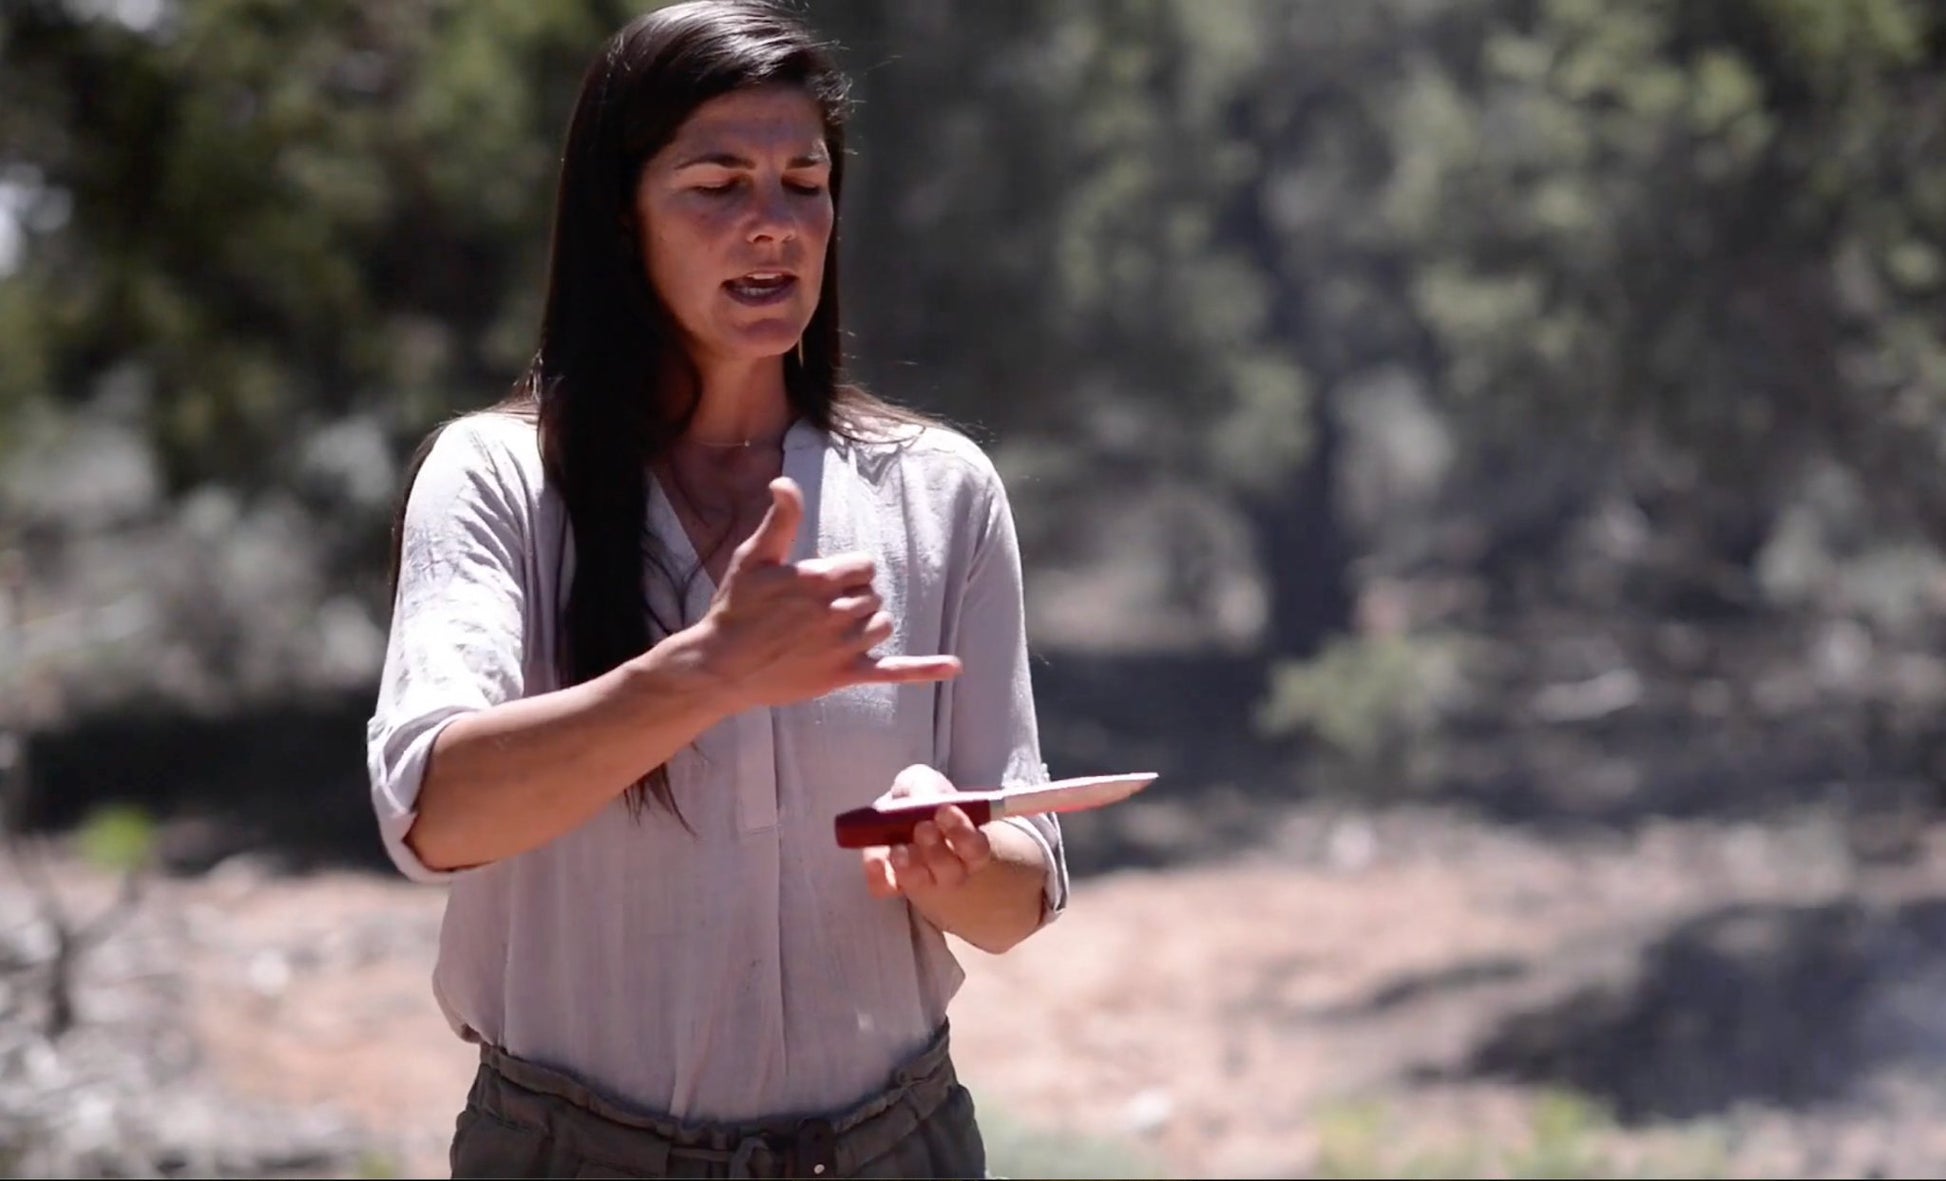 Into the Desert with Kirsten Rechnitz (Online Streaming) - Gray Bearded Green Beret